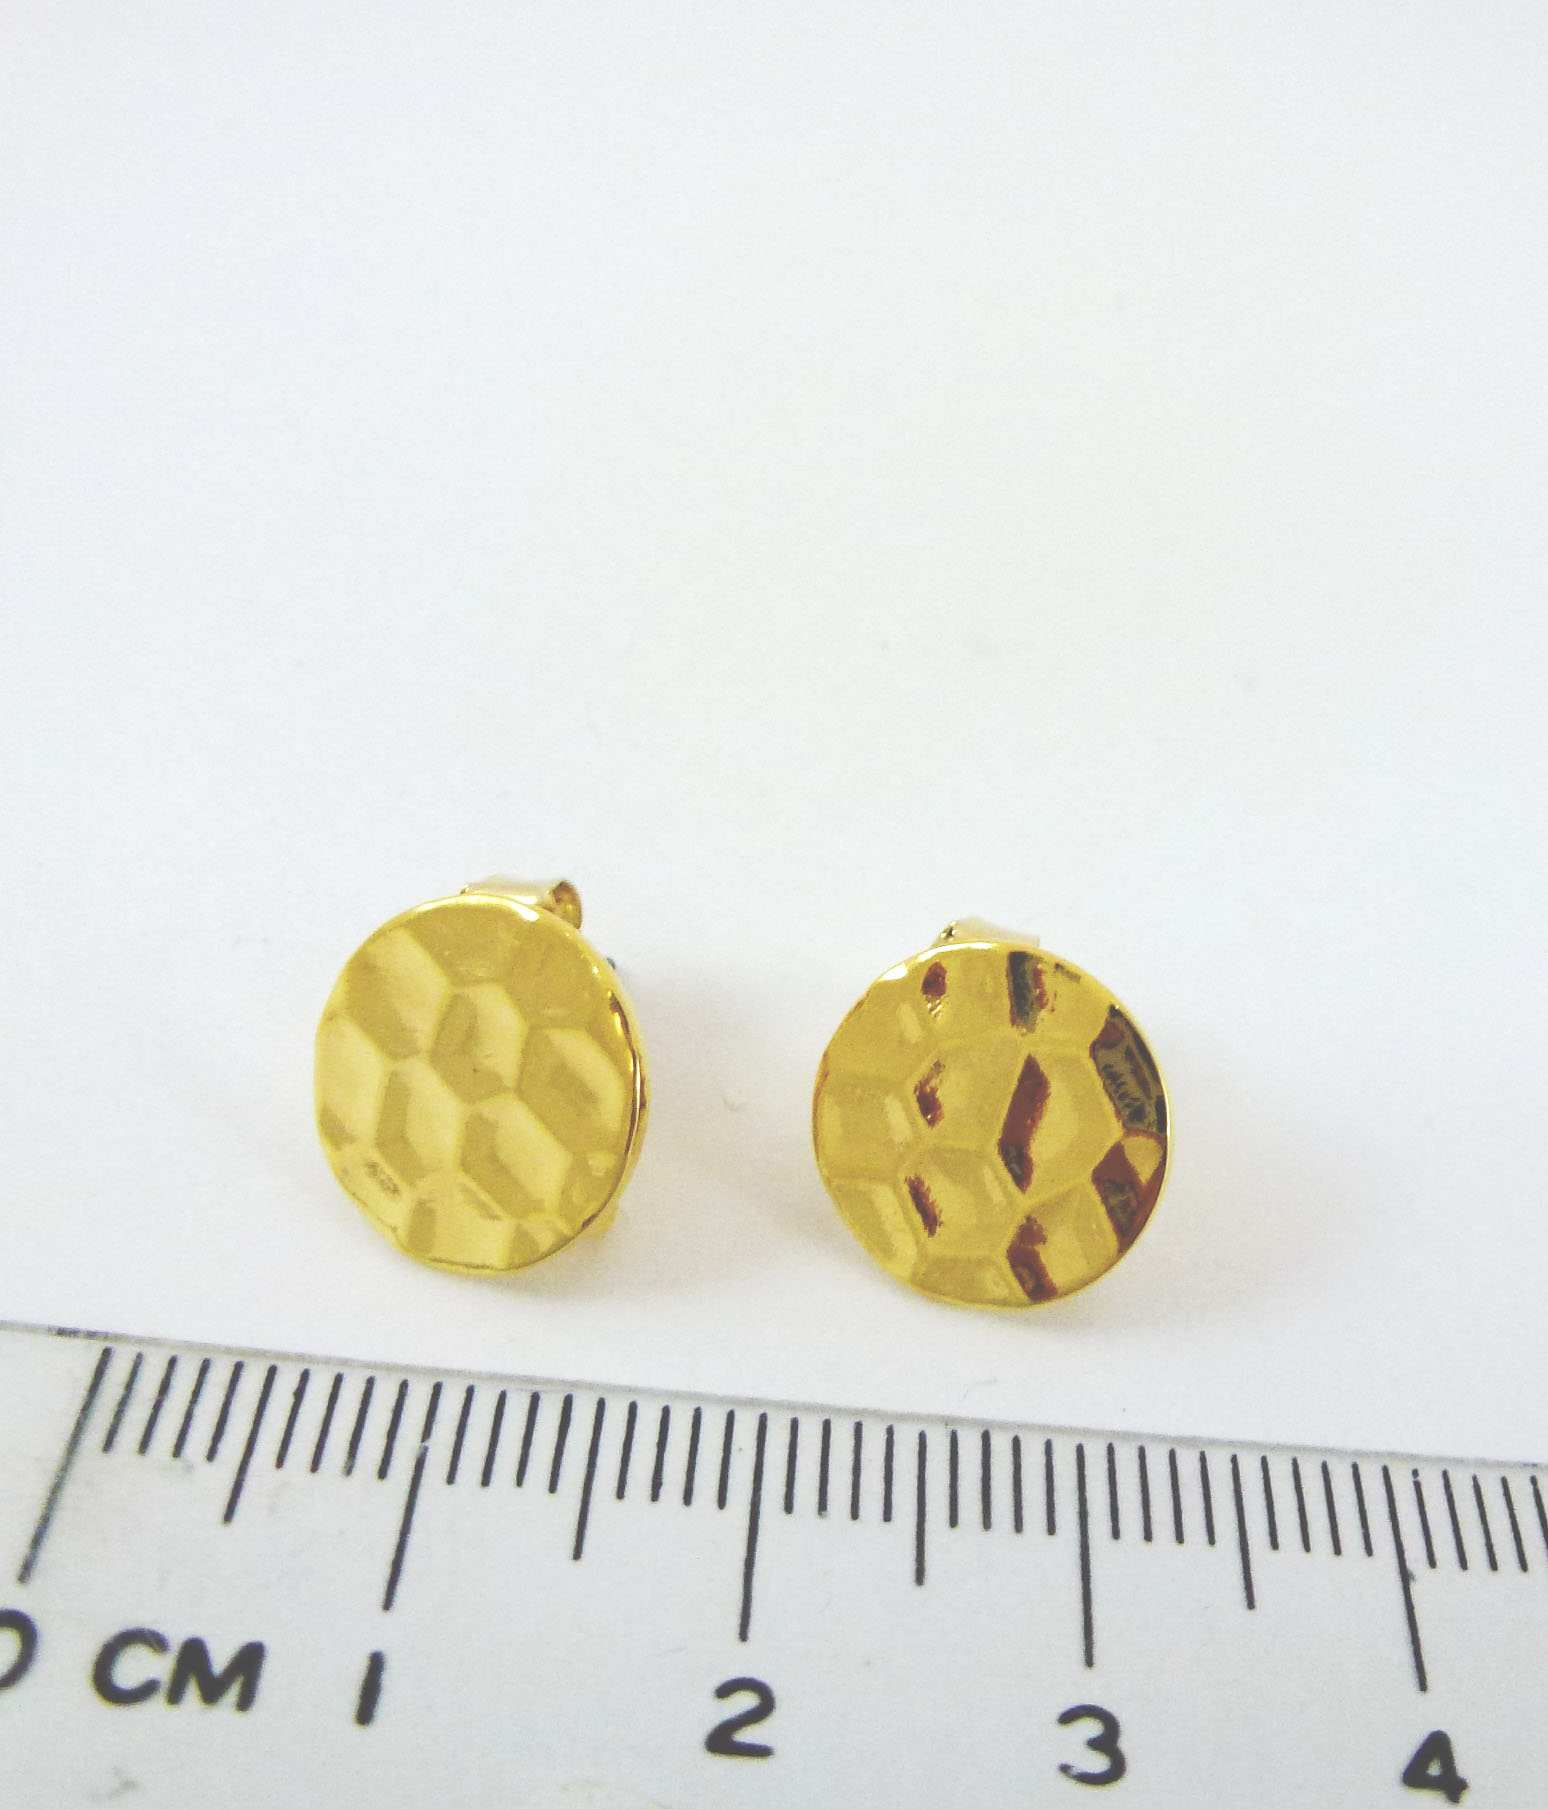 12mm銅鍍金色圓形蜂巢紋不銹鋼耳針